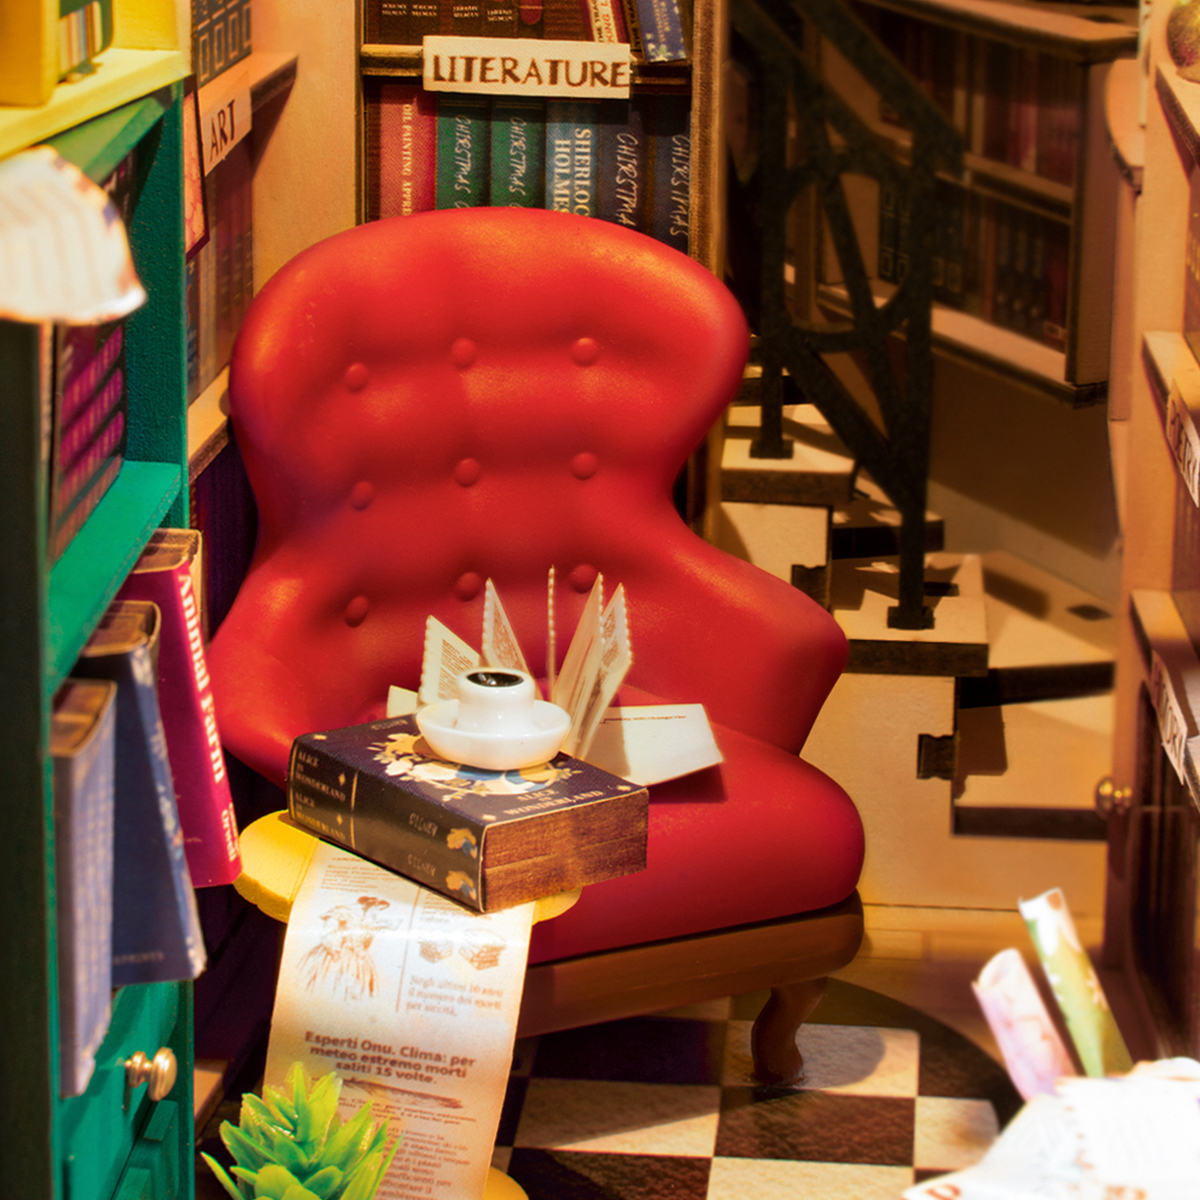 Robotime Rolife - Book Nook Librairie de Shakespeare - TGB07 - Maison  miniature DIY 